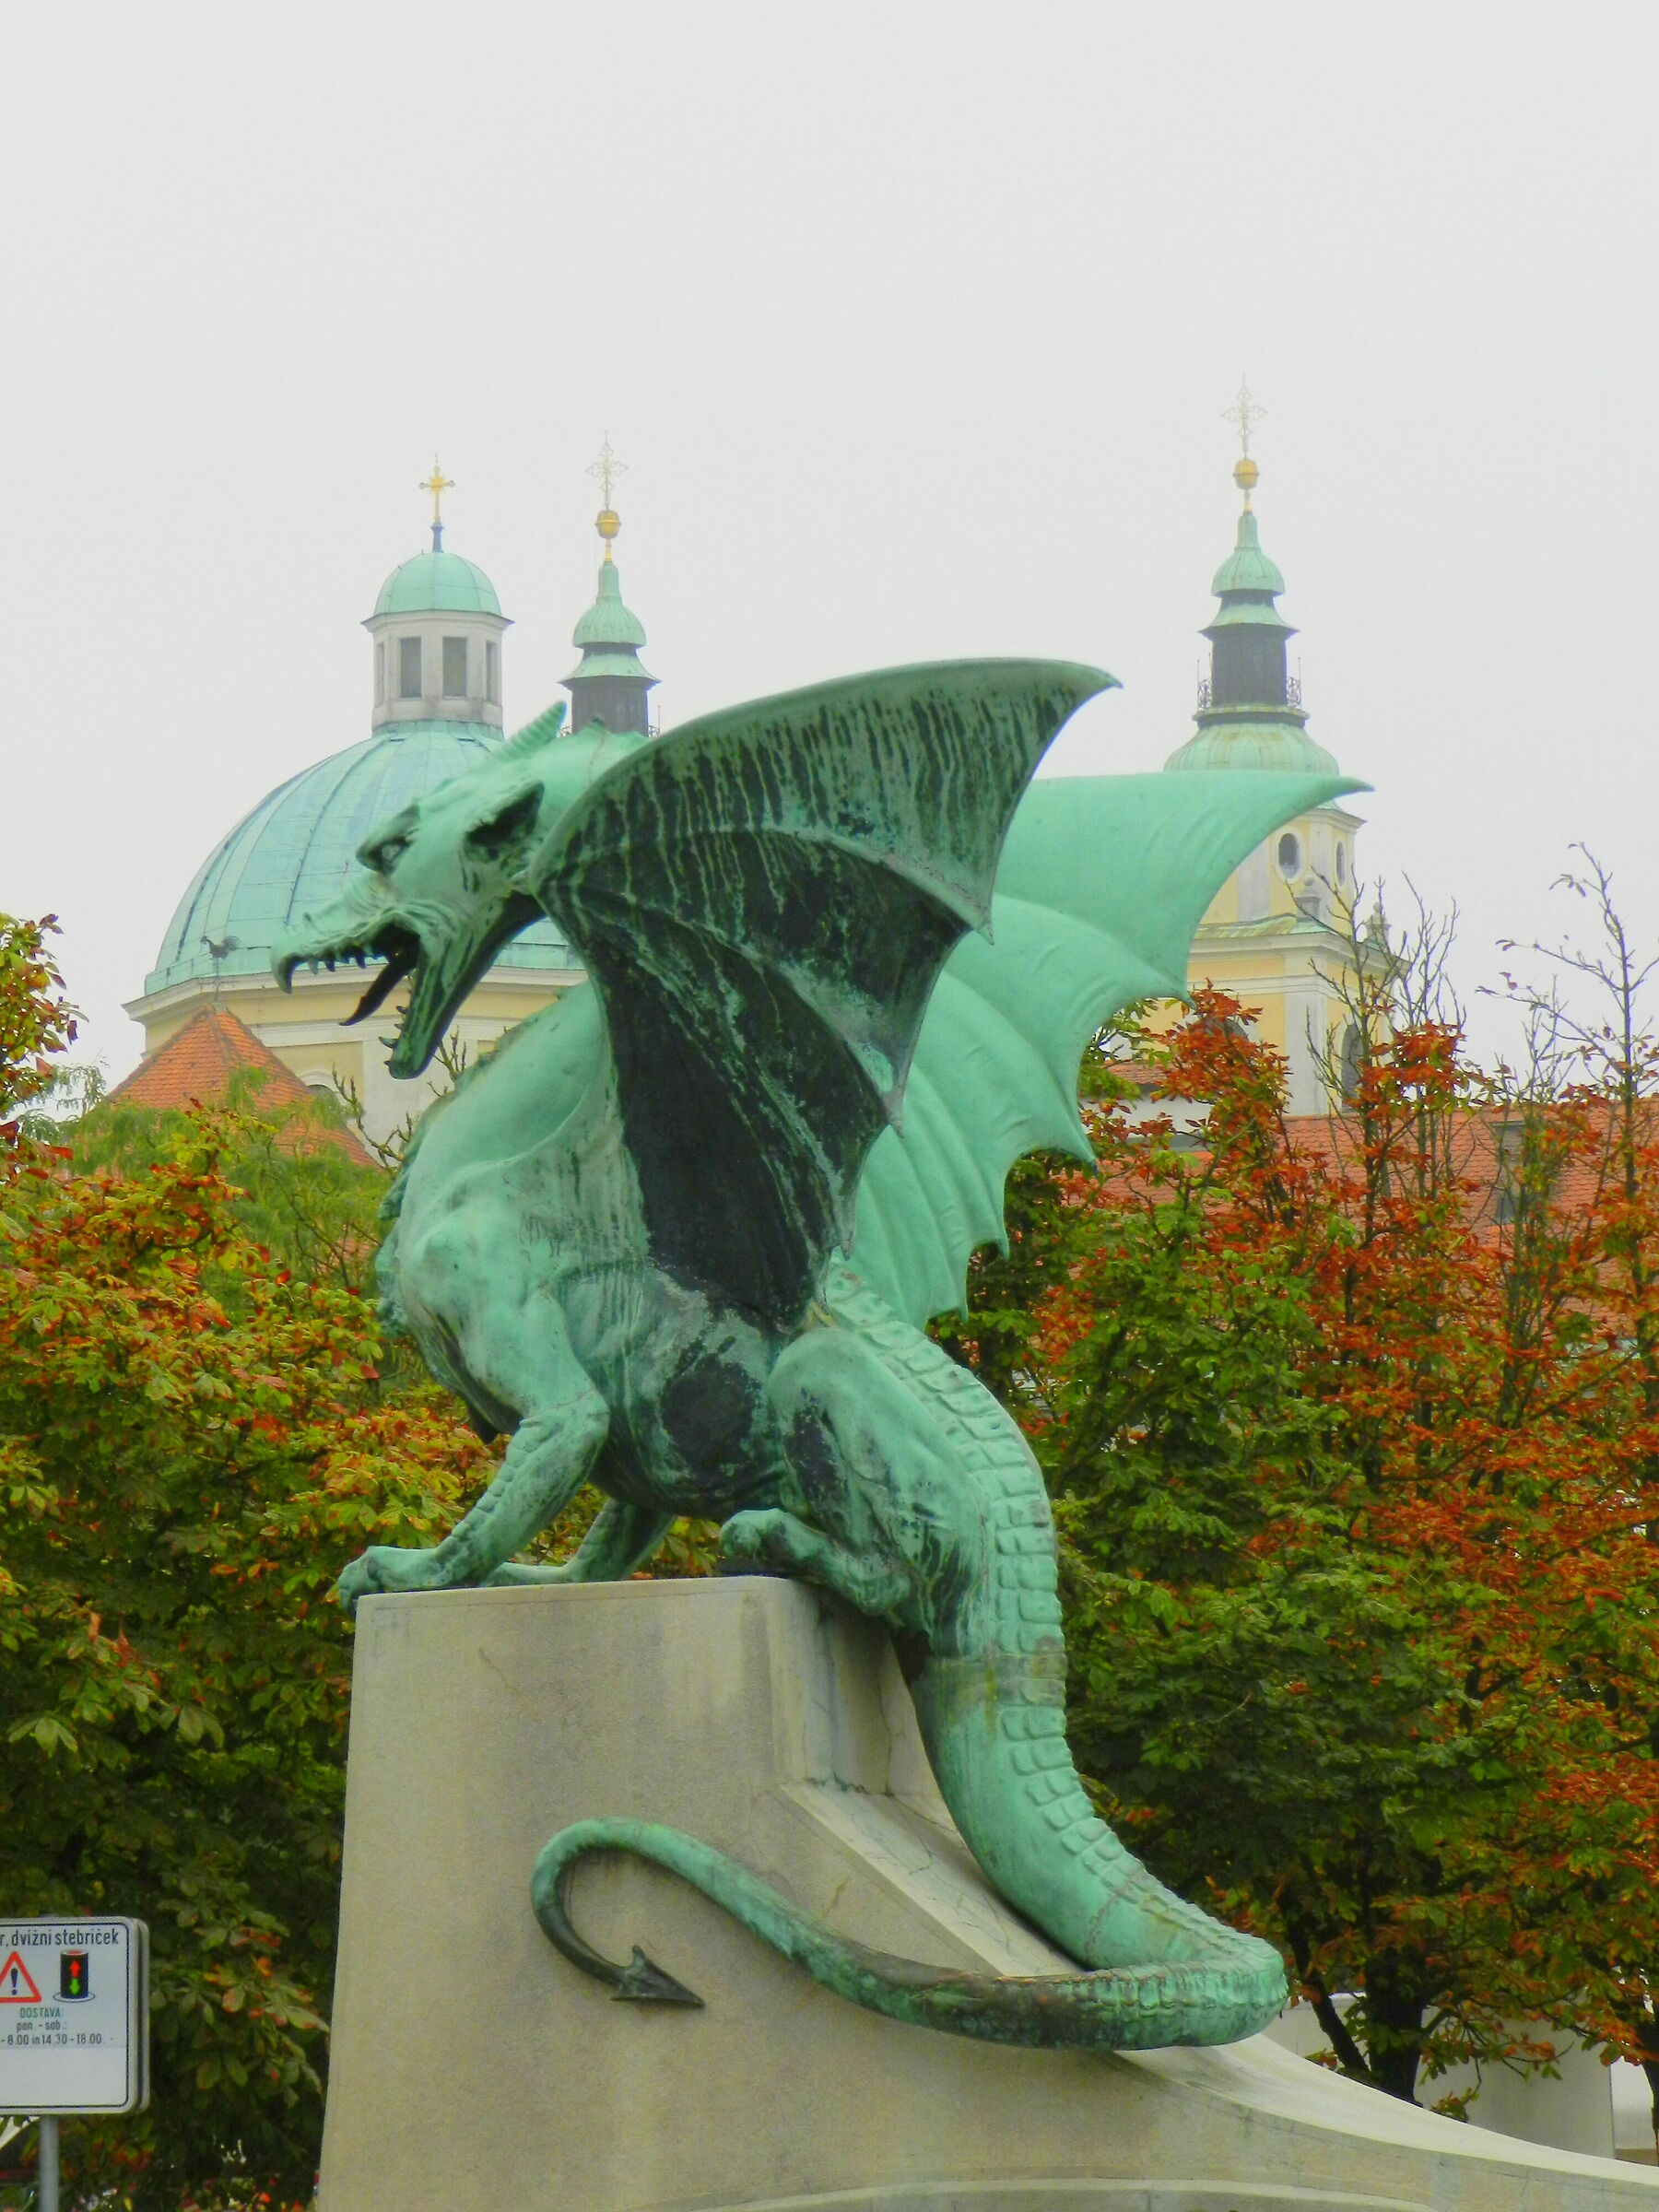 The Ljubljana Dragon...